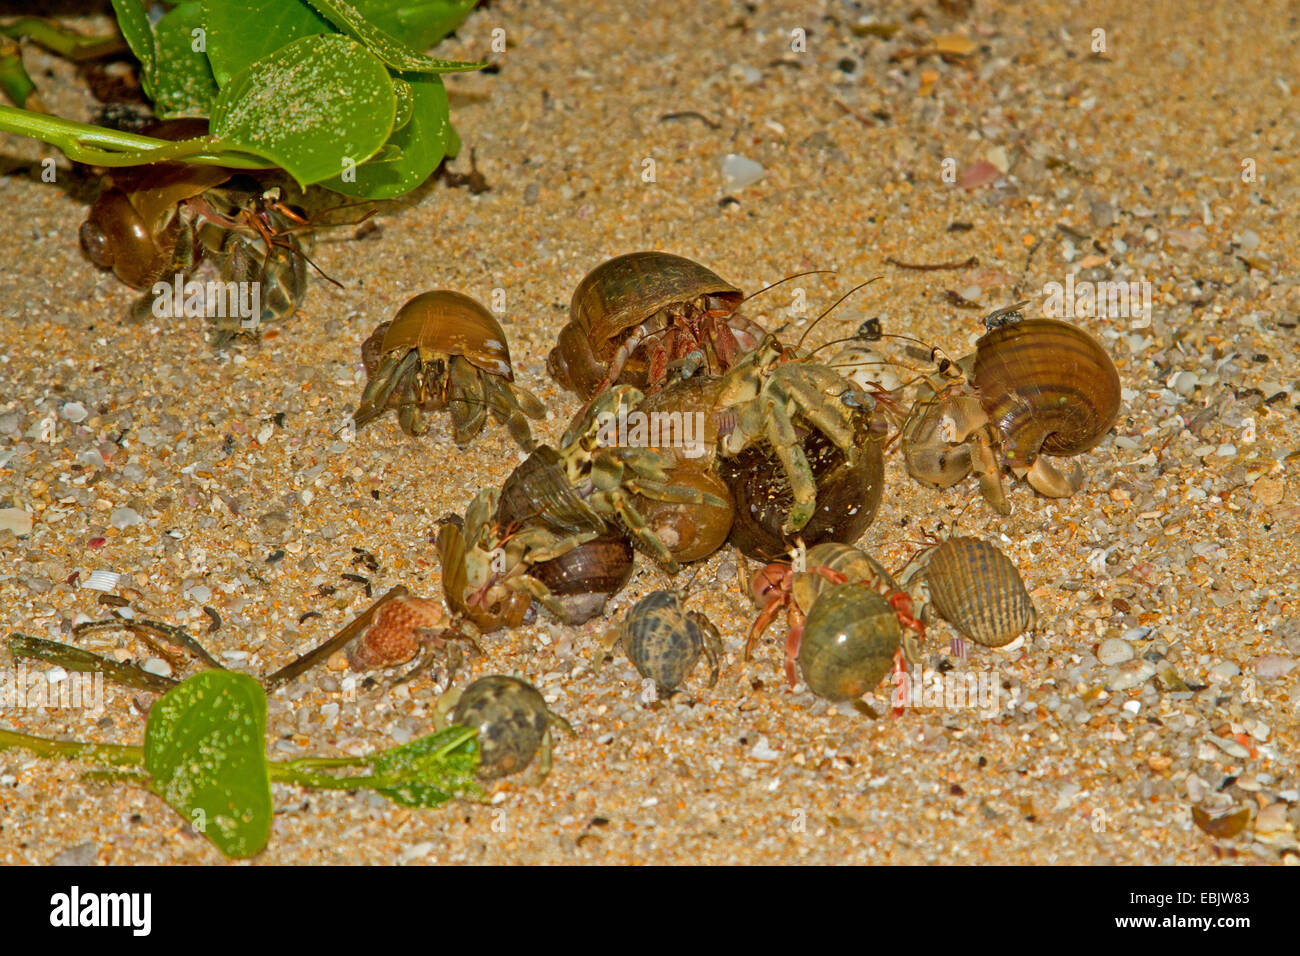 land hermit crabs (Coenobita spec.), several individual in snail shell, Thailand, Phuket Stock Photo